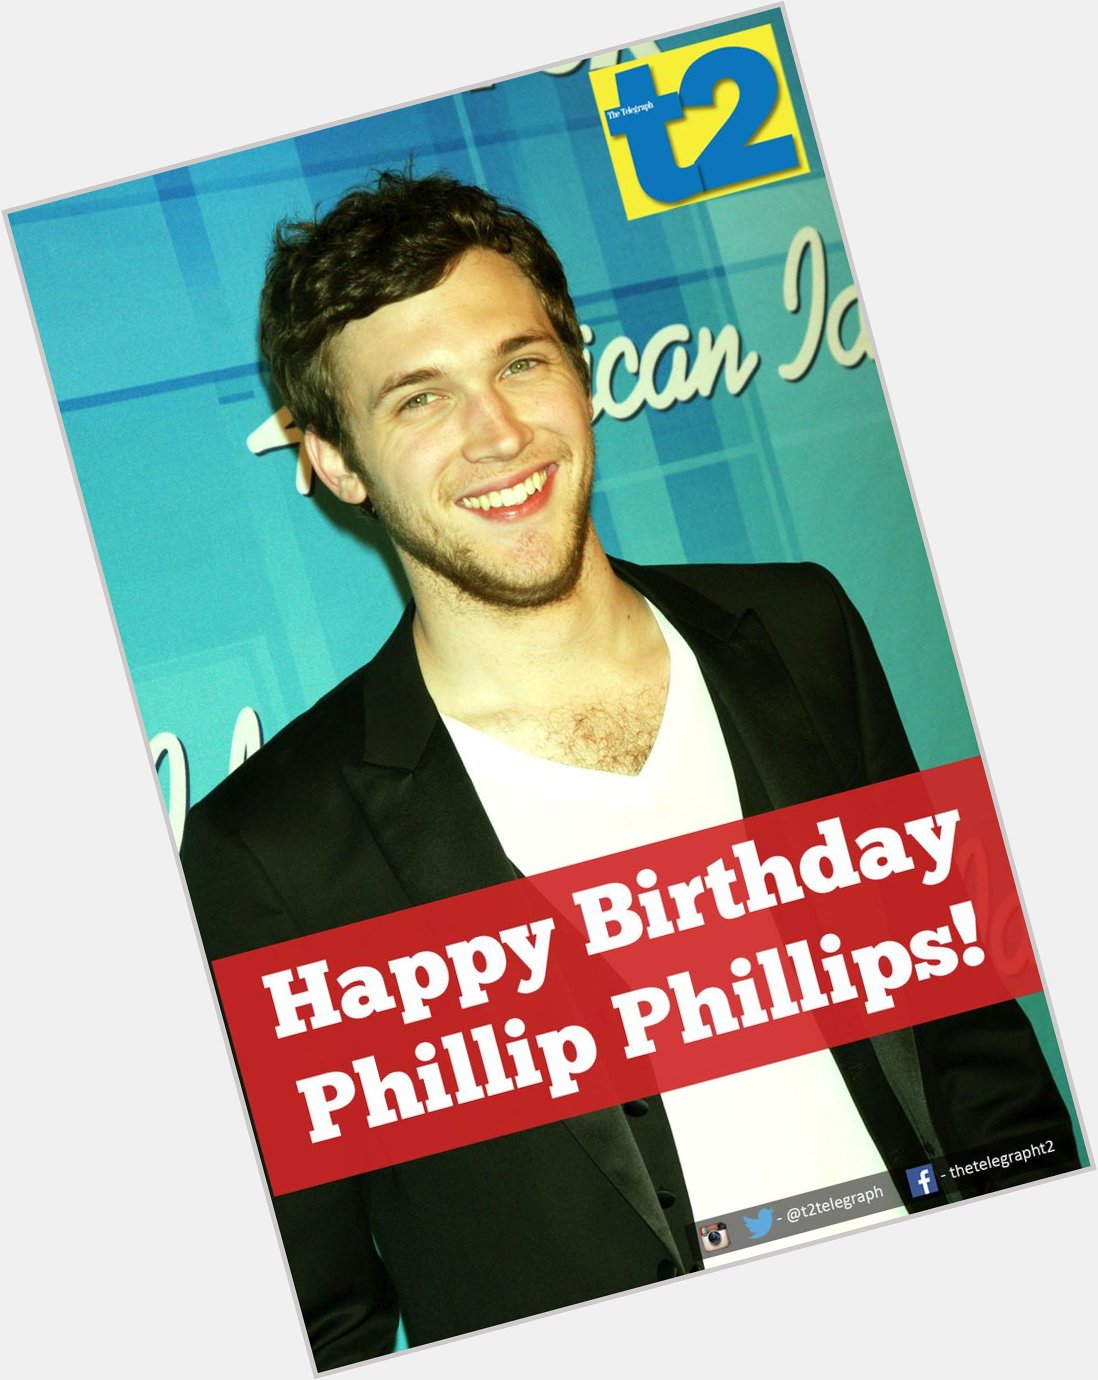 Wishing the 25-year-old winner Phillip Phillips a very happy birthday!... 